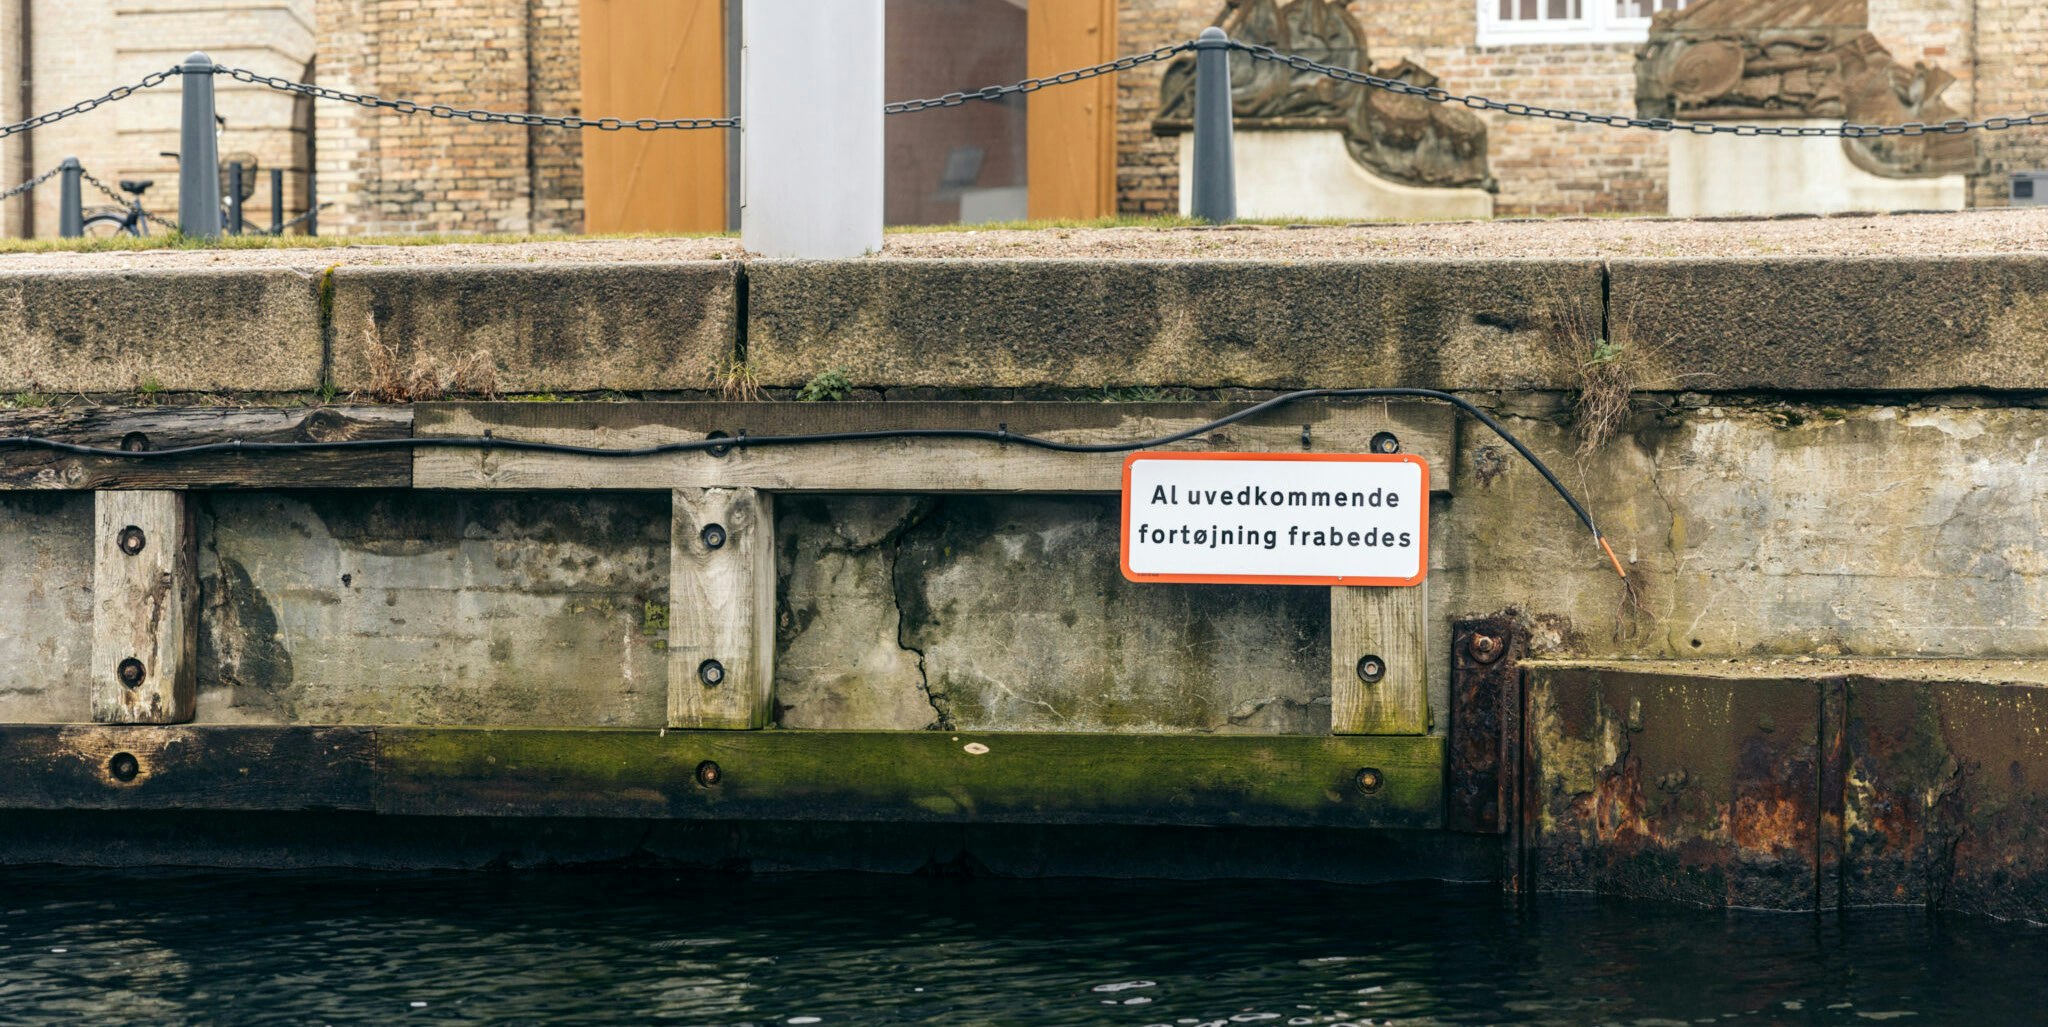 Copenhagen Harbour Water Marine Traffic Regulations Mooring Prohibited Signage Canals GoBoat